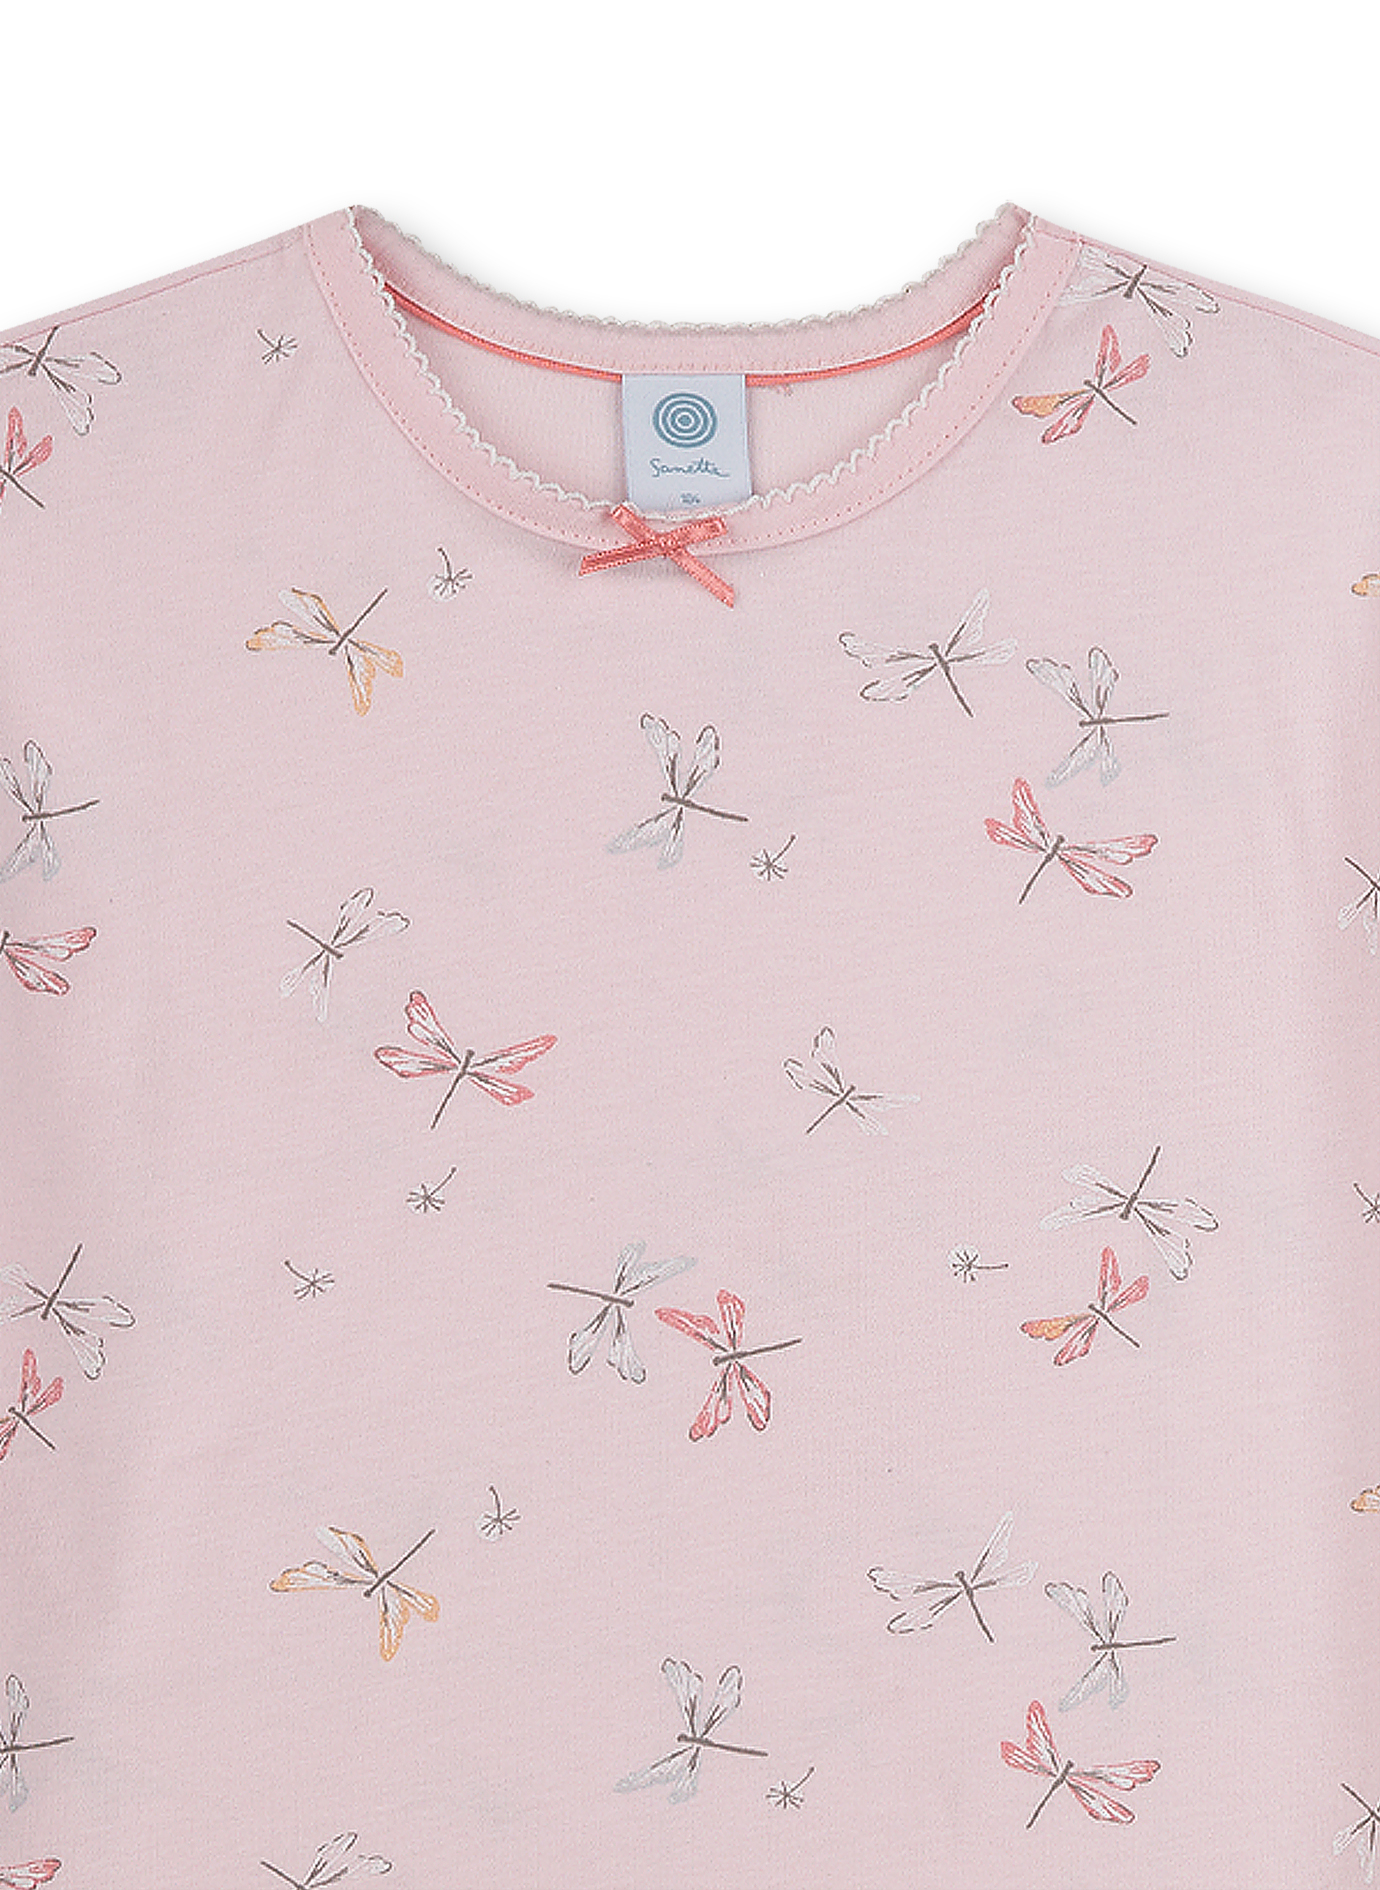 Mädchen-Schlafanzug Rosa Shiny Dragonfly